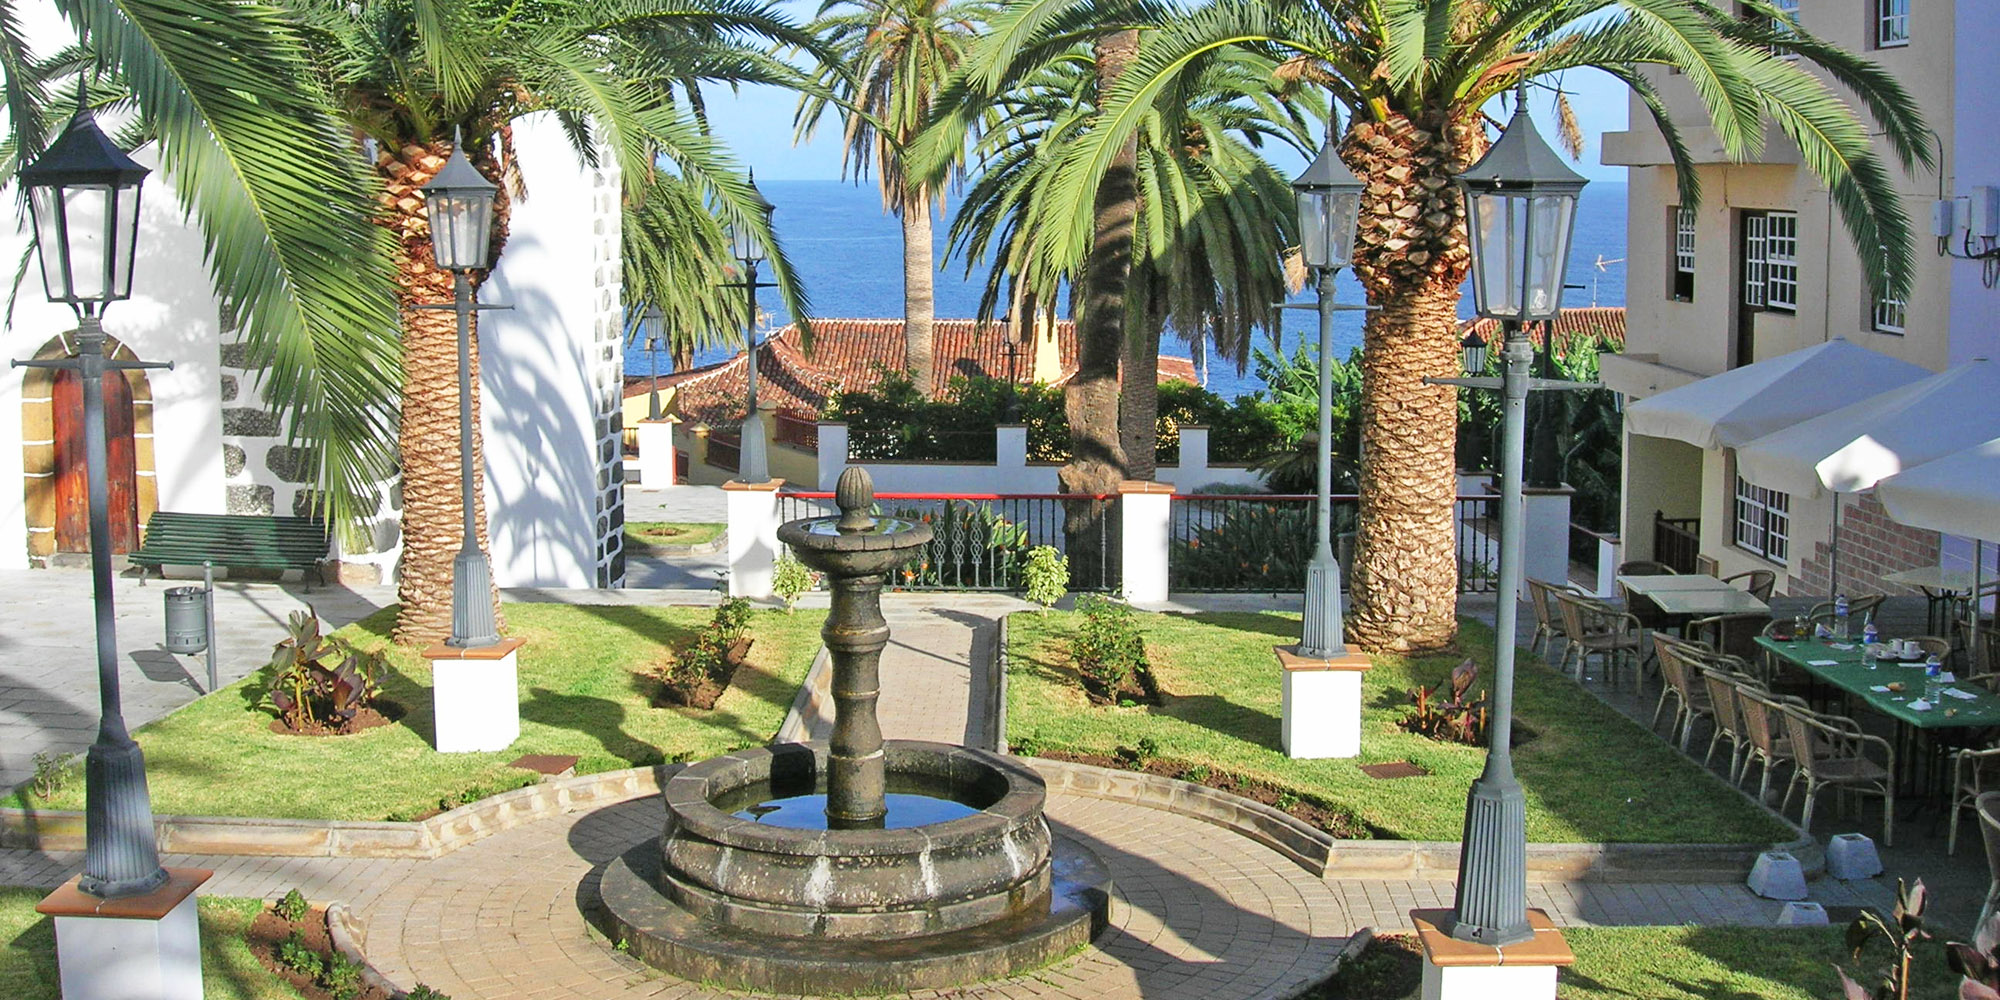 Terrasse in San Michael auf La Palma